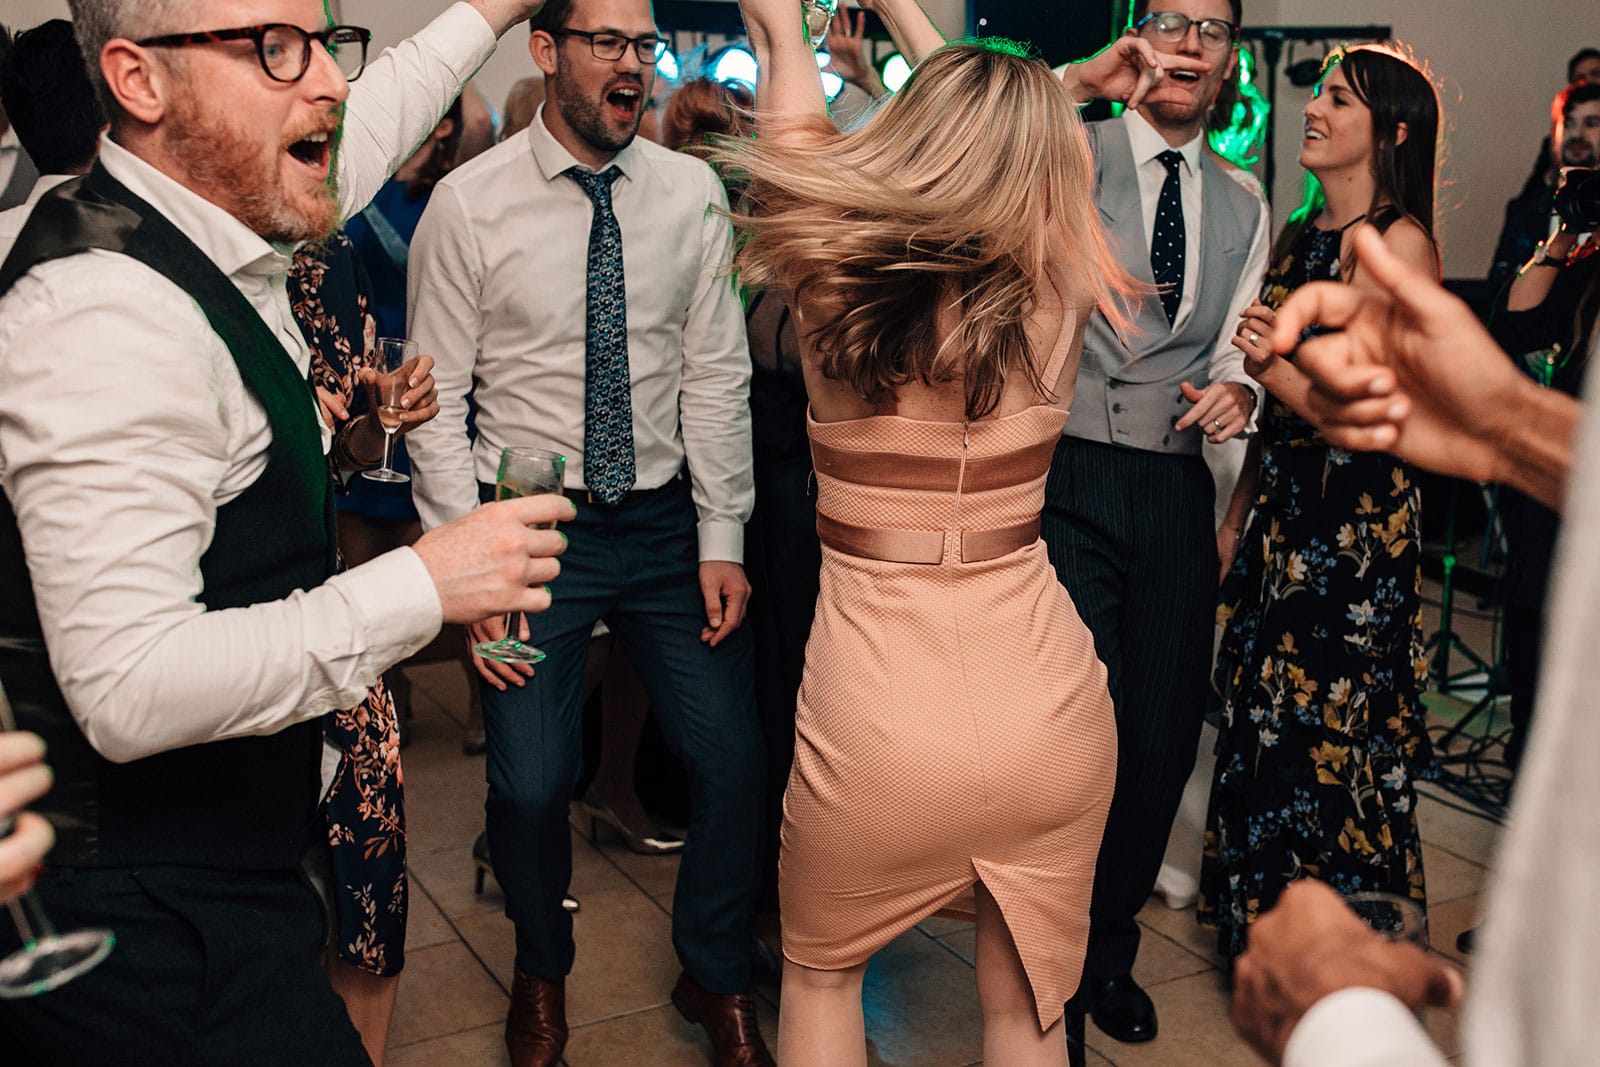 Natural and fun photography of wedding guests dancing